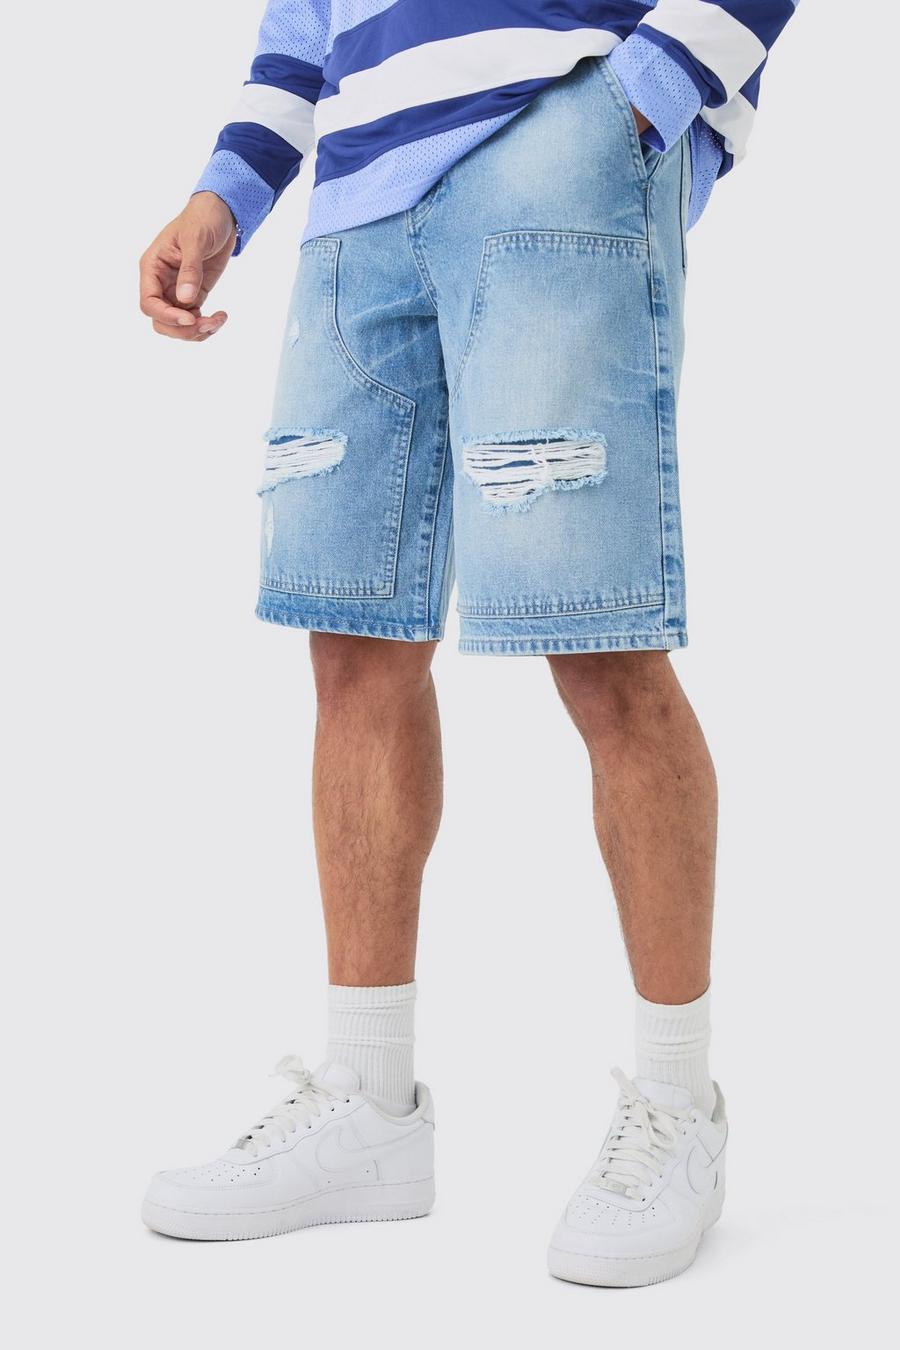 Pantalón corto vaquero holgado sin tratar roto estilo carpintero en azul claro, Light blue image number 1